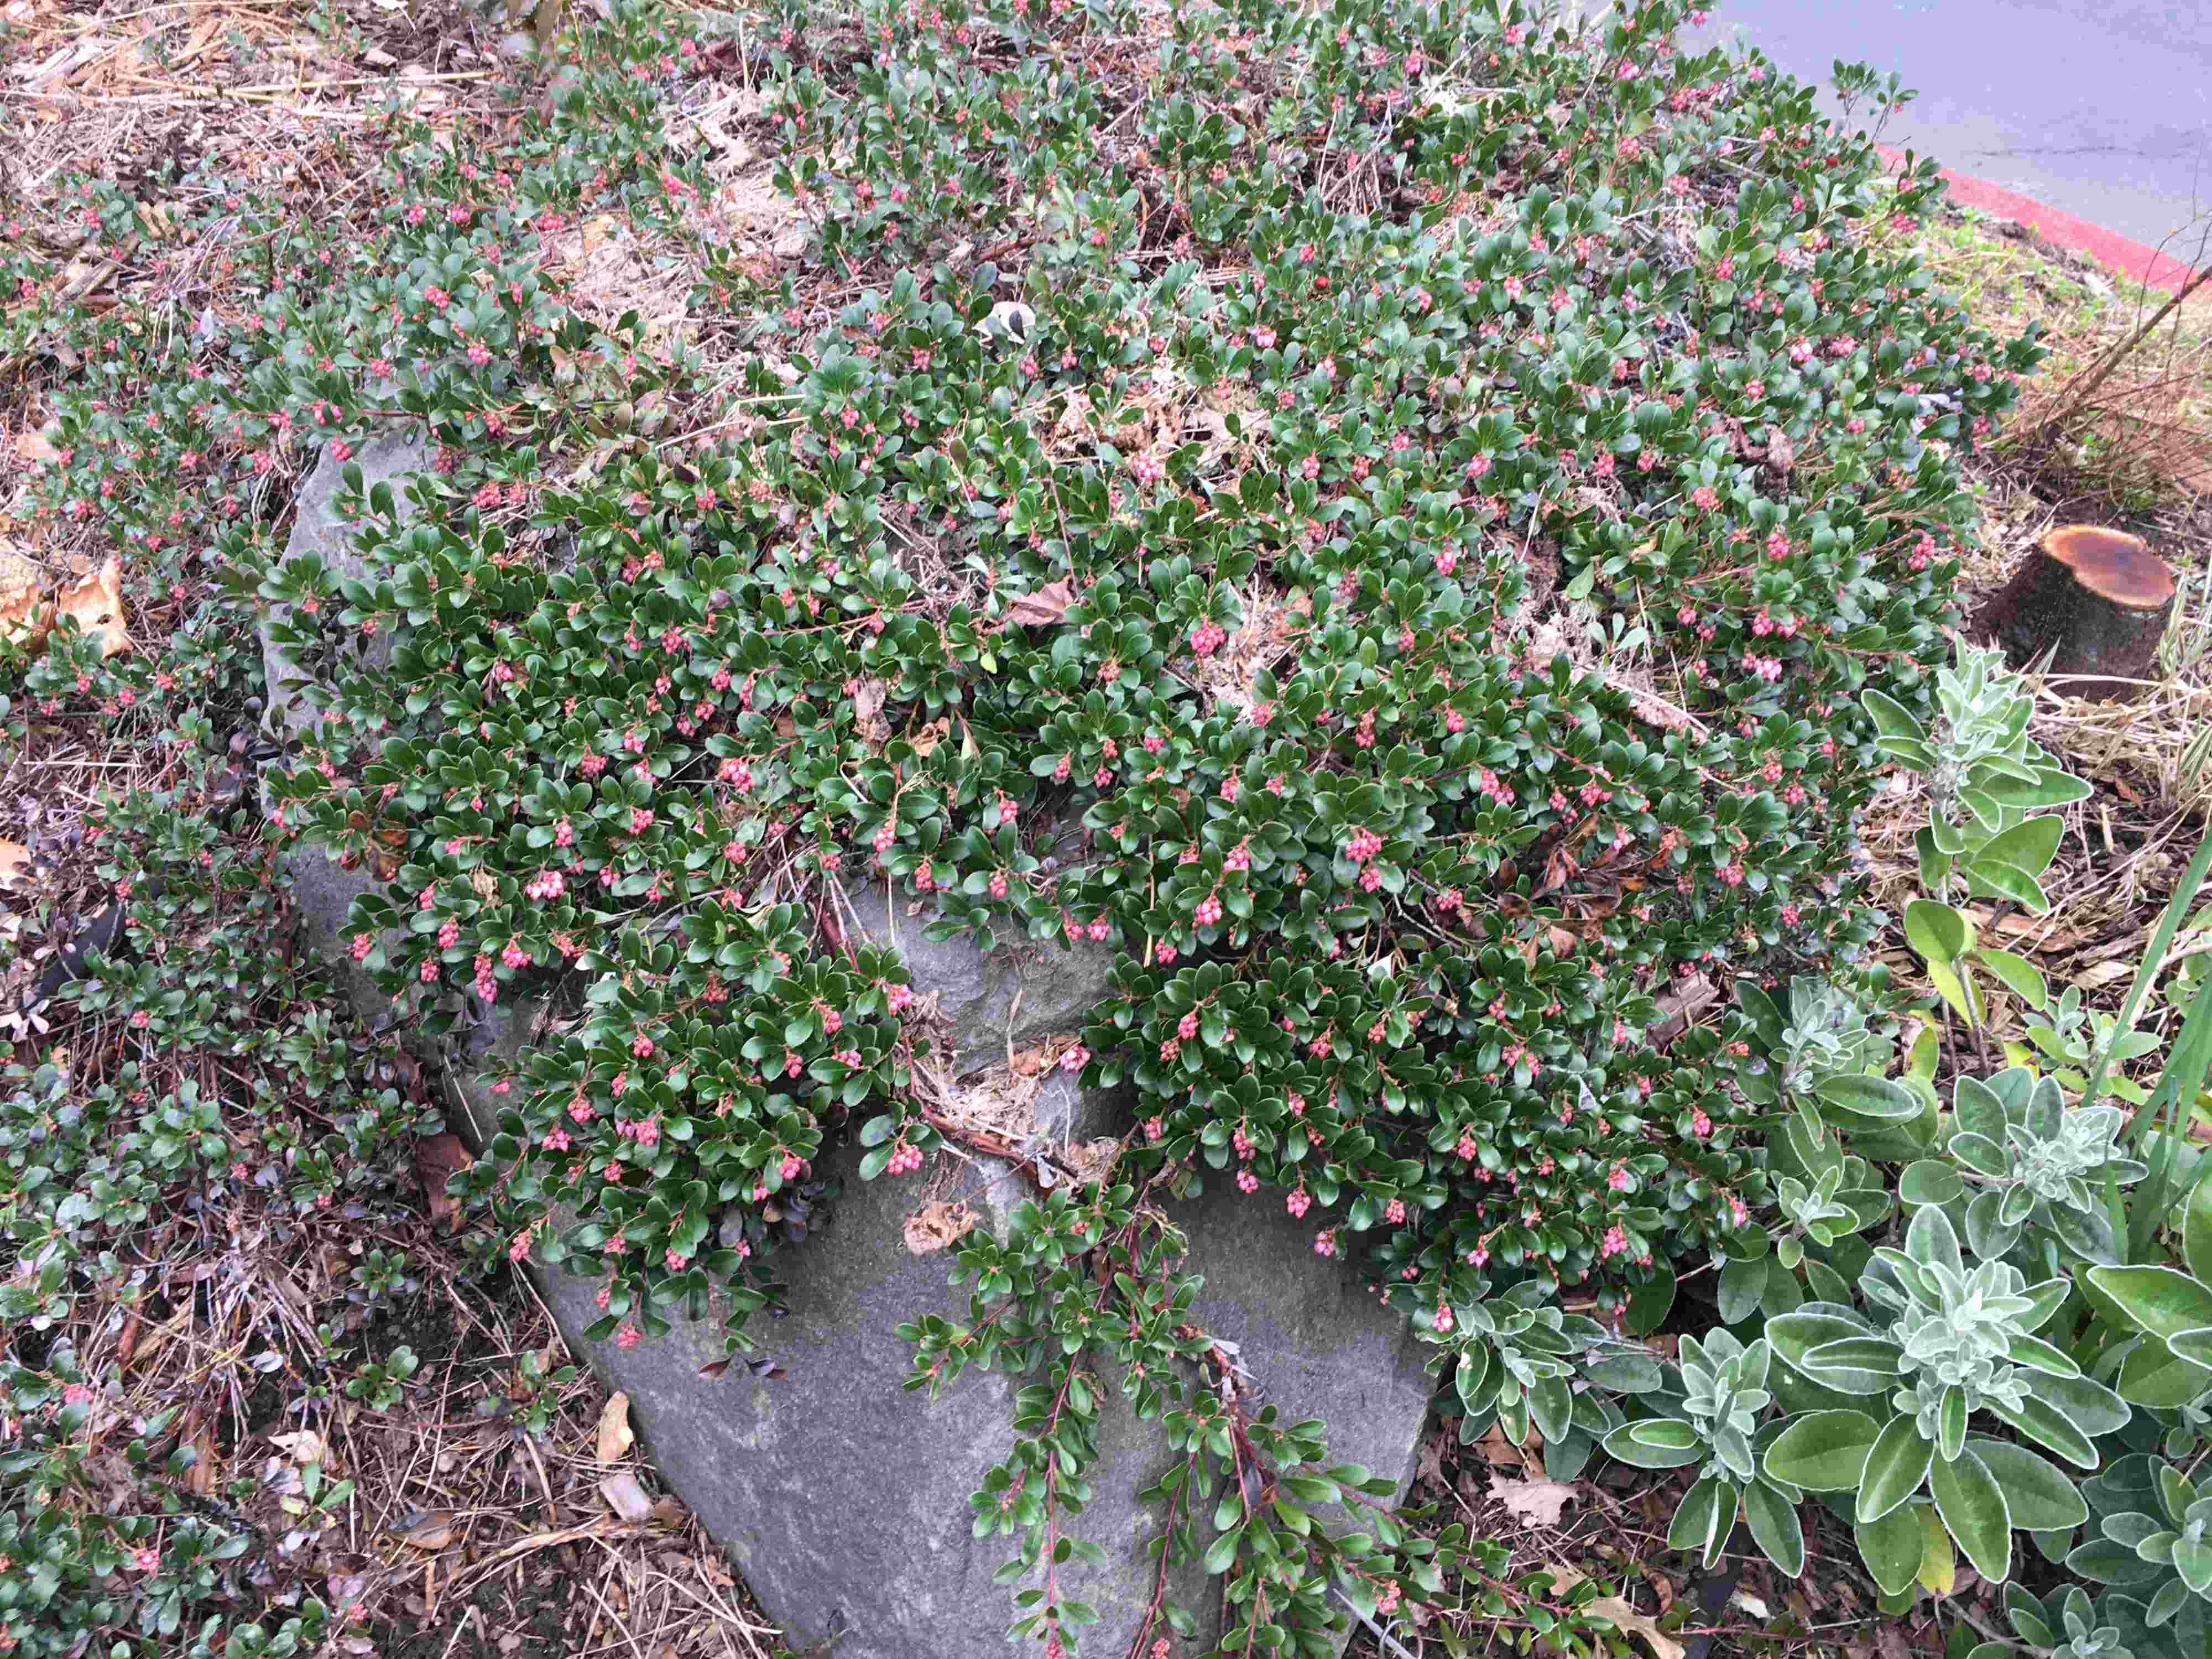 Arctostaphylos uva-ursi flowering in a native plant garden near Seattle, WA.